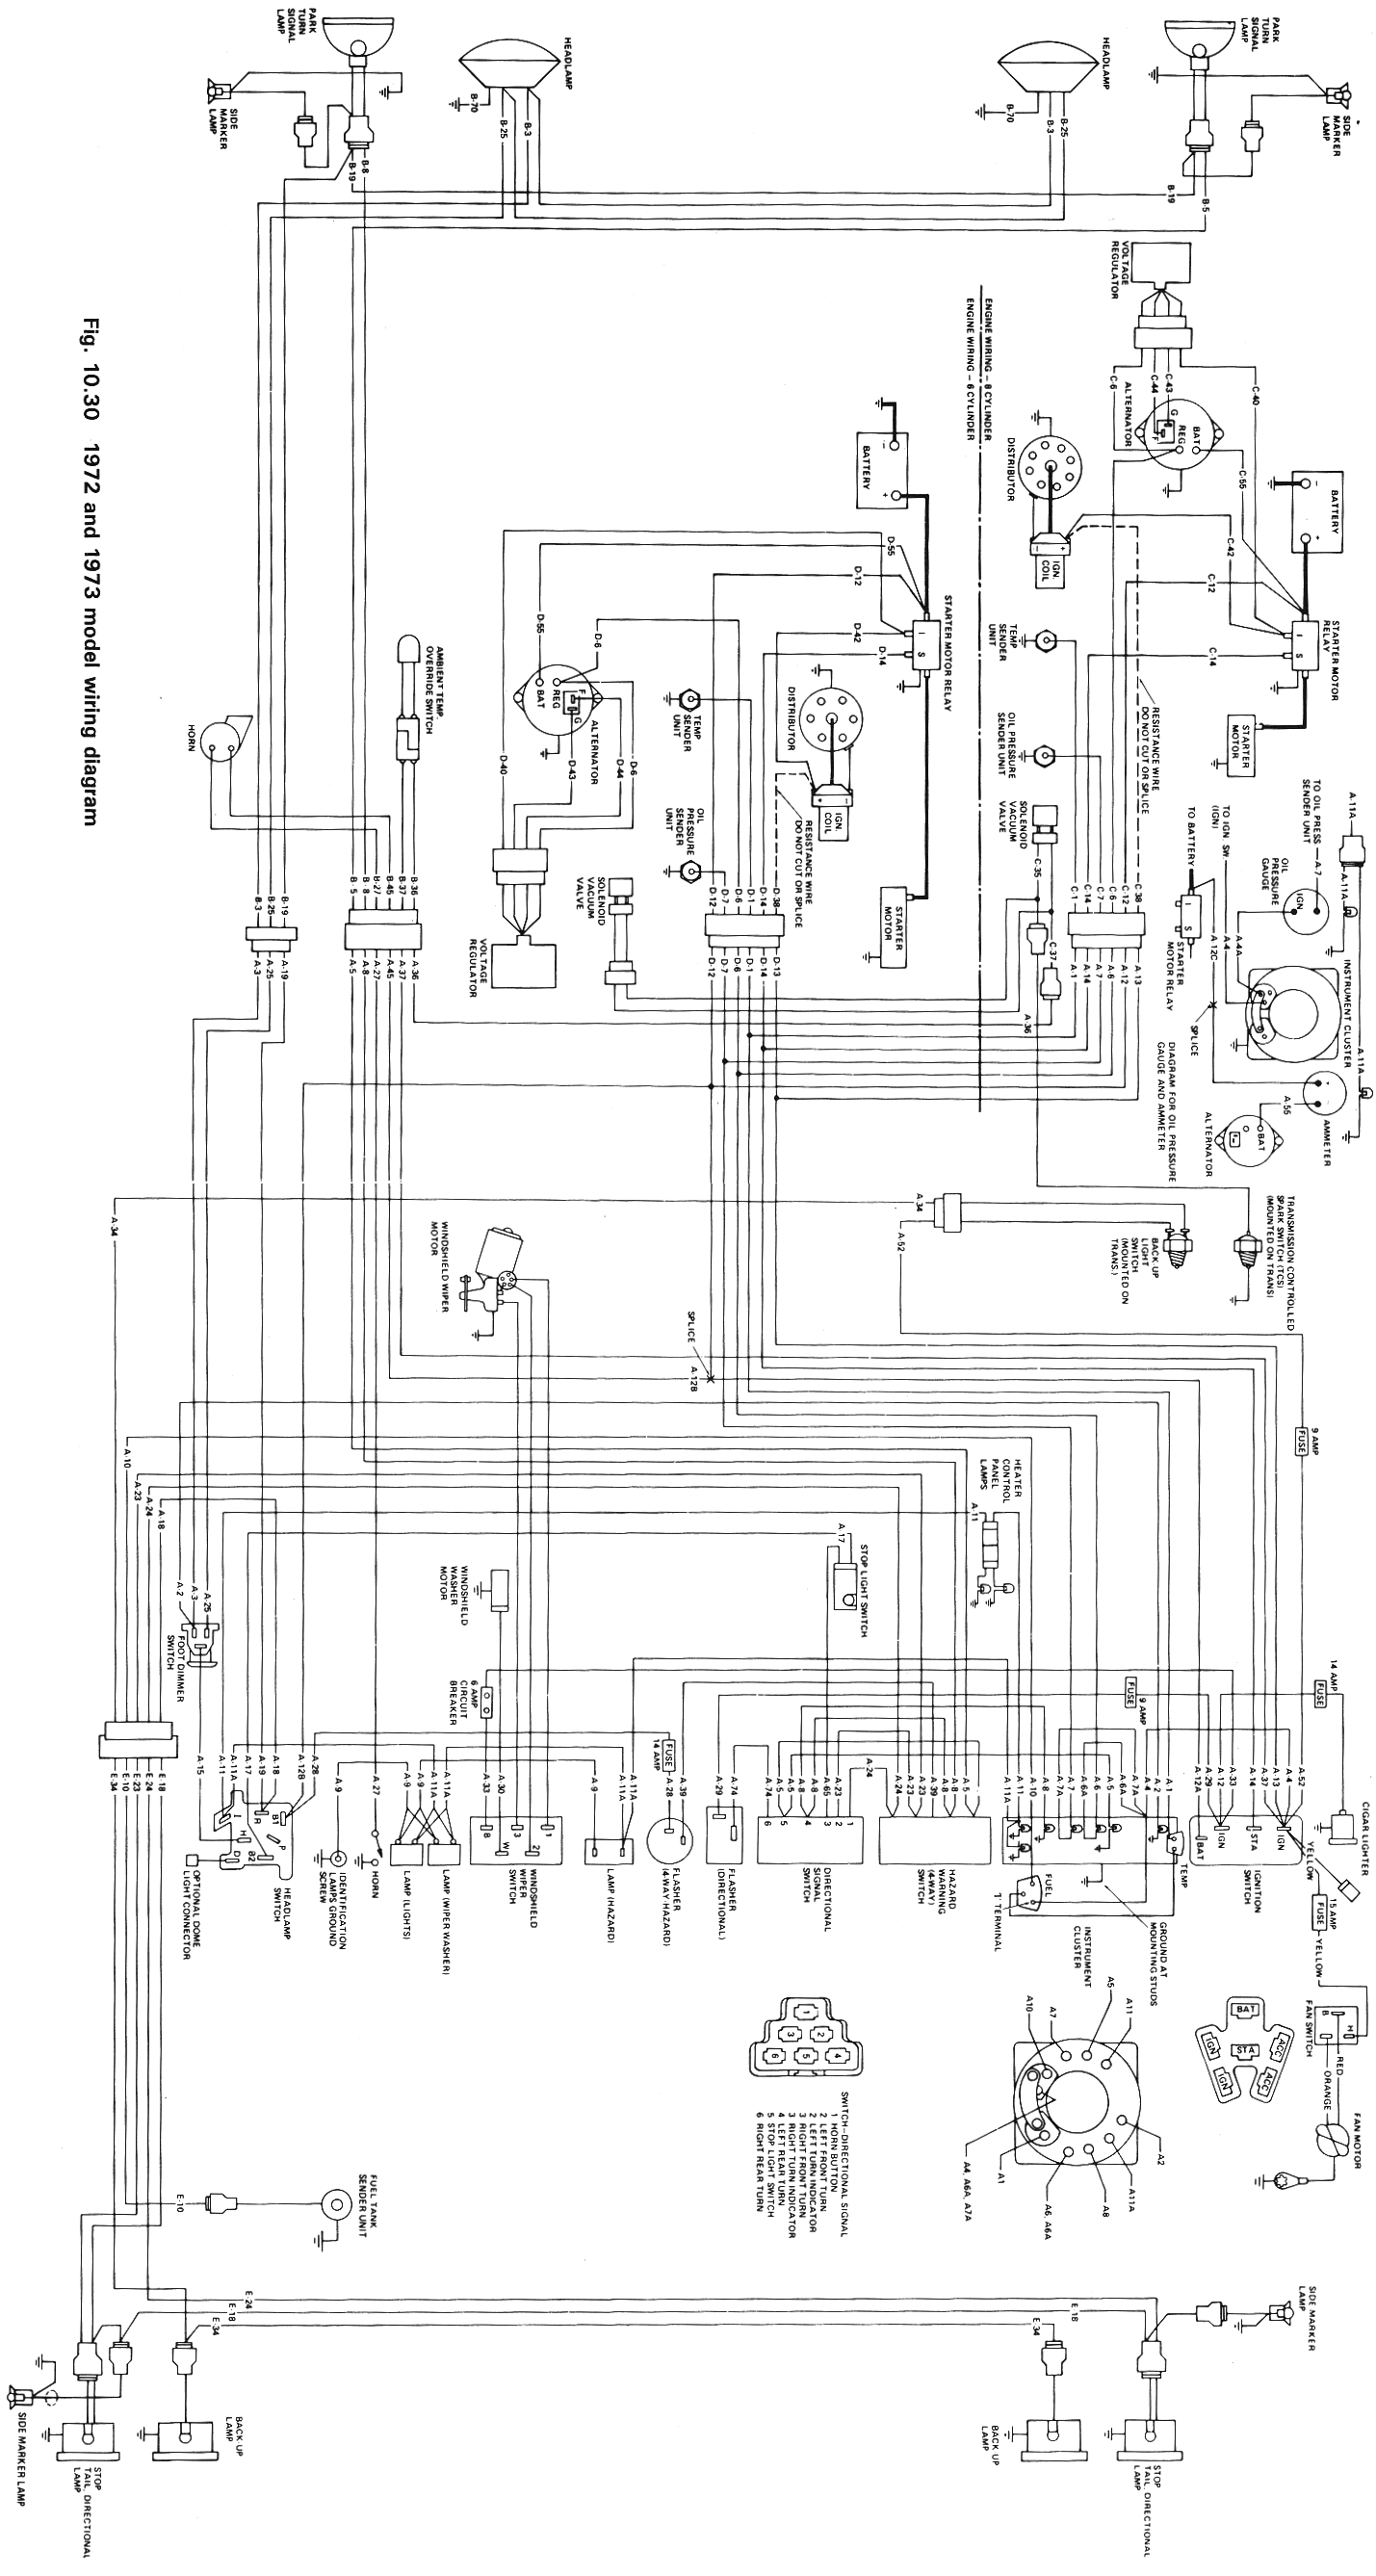 Diagram Se Ter O Cj7 Wiring Diagram Full Version Hd Quality Wiring Diagram Coastdiagramleg Cstem It